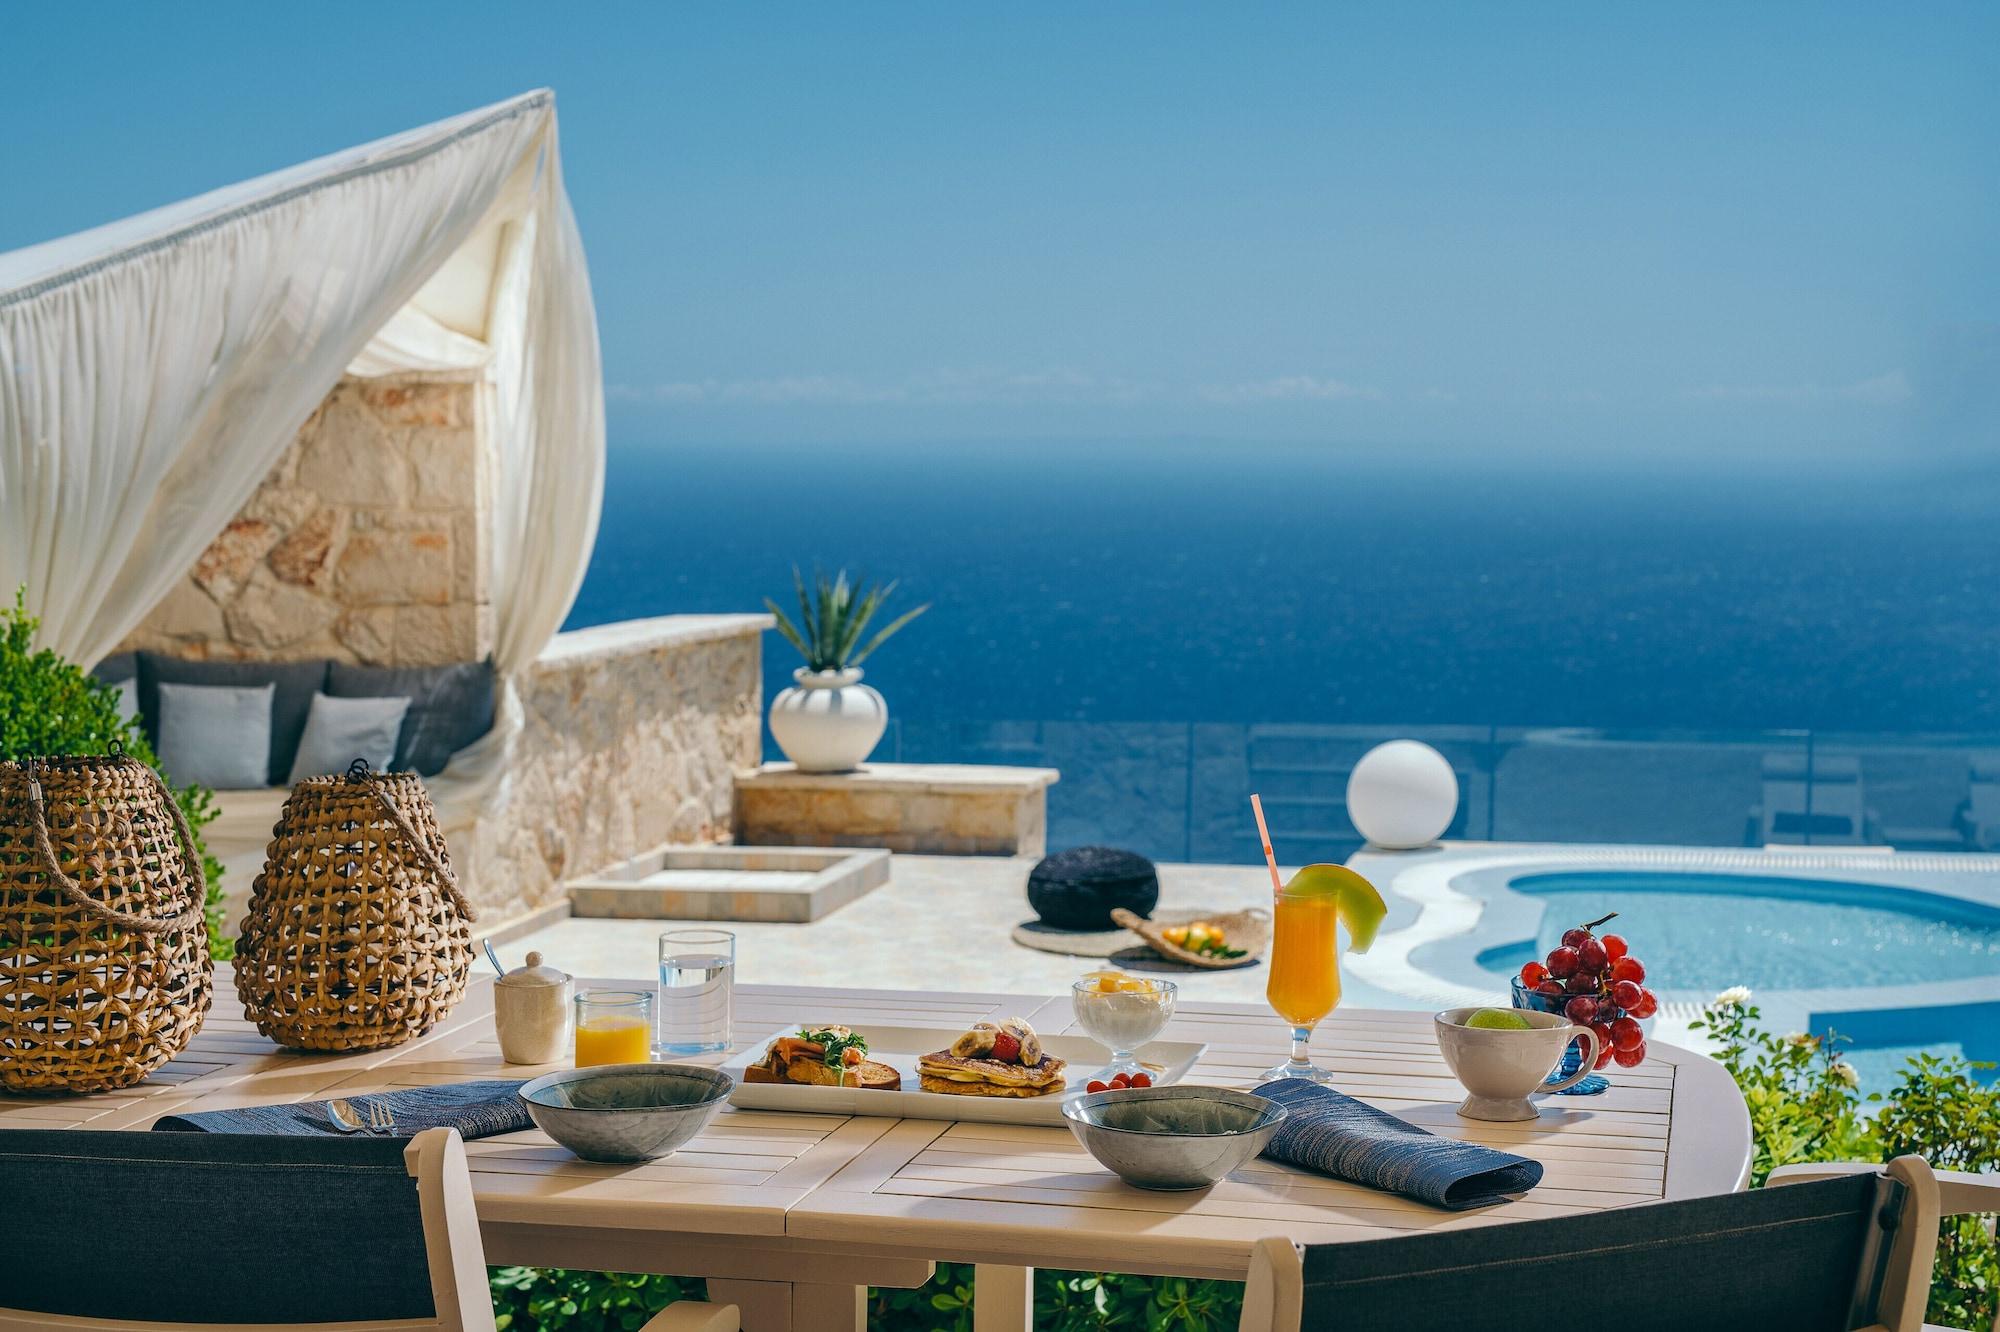 Emerald Villas & Suites - The Finest Hotels Of The World Agios Nikolaos  Exterior photo